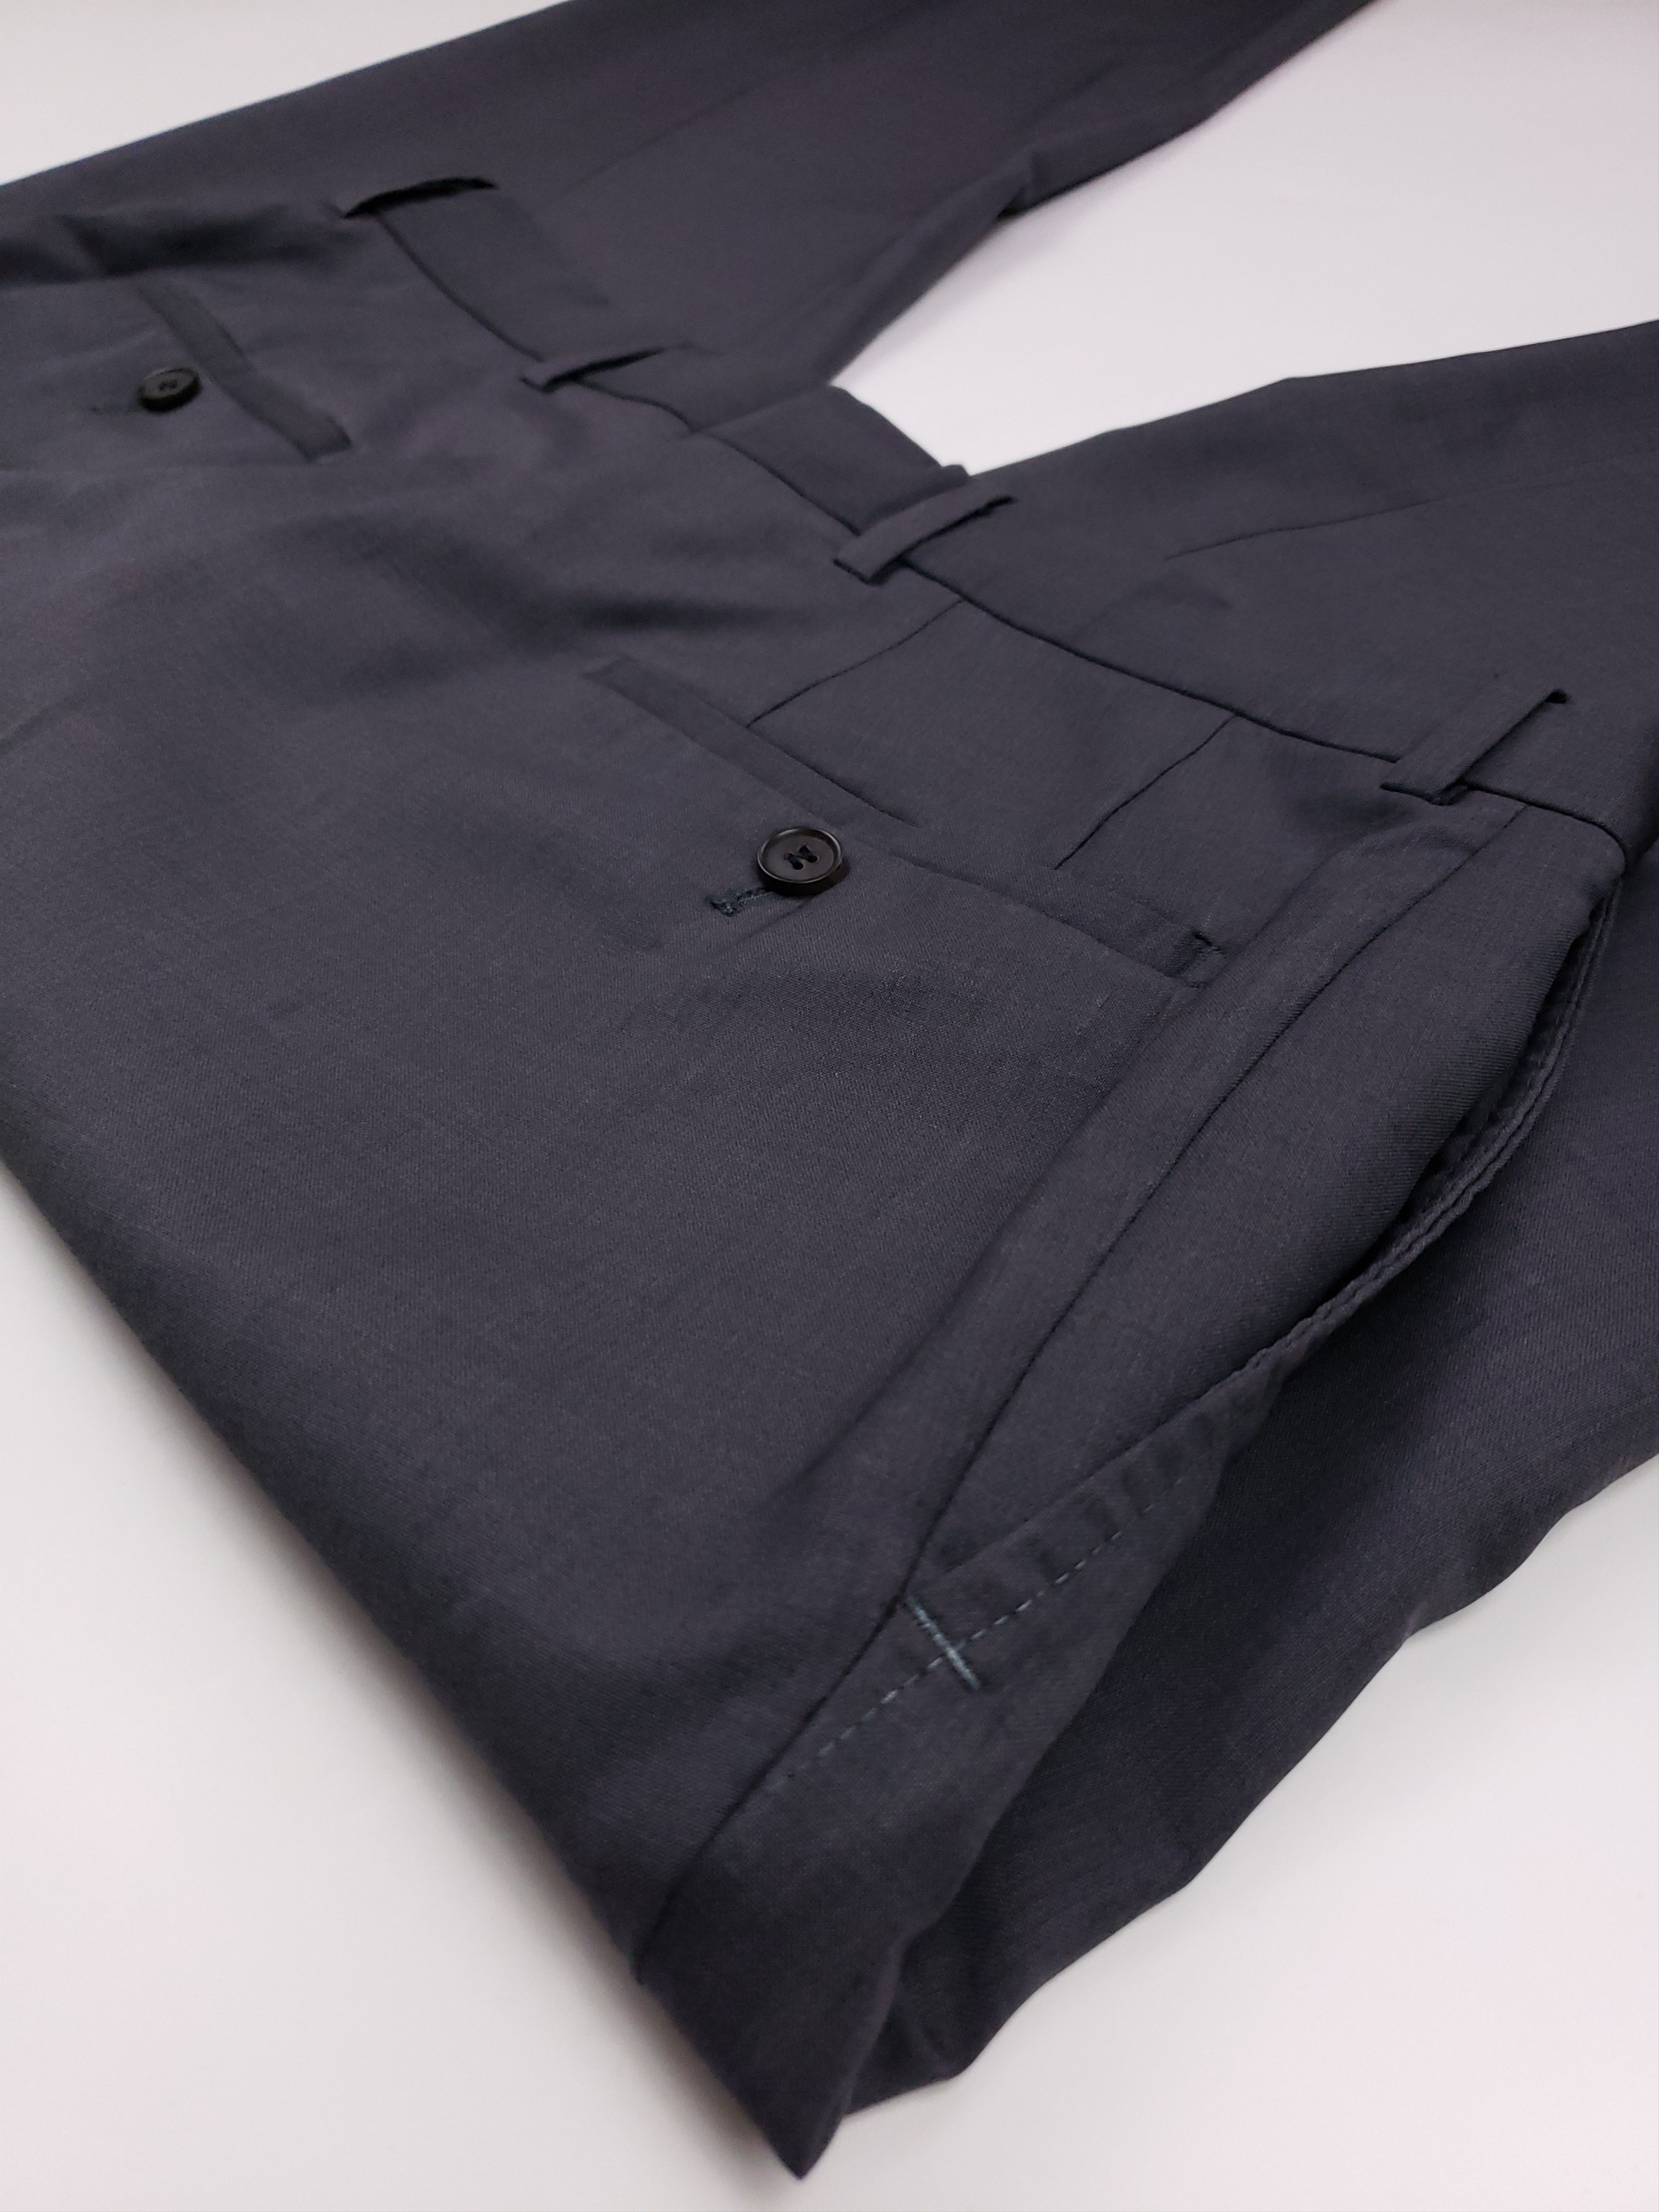 Hugo Boss Hugo Boss James Brown Pants 32x30 Gray Charcoal Wool Cashme Size US 32 / EU 48 - 10 Thumbnail